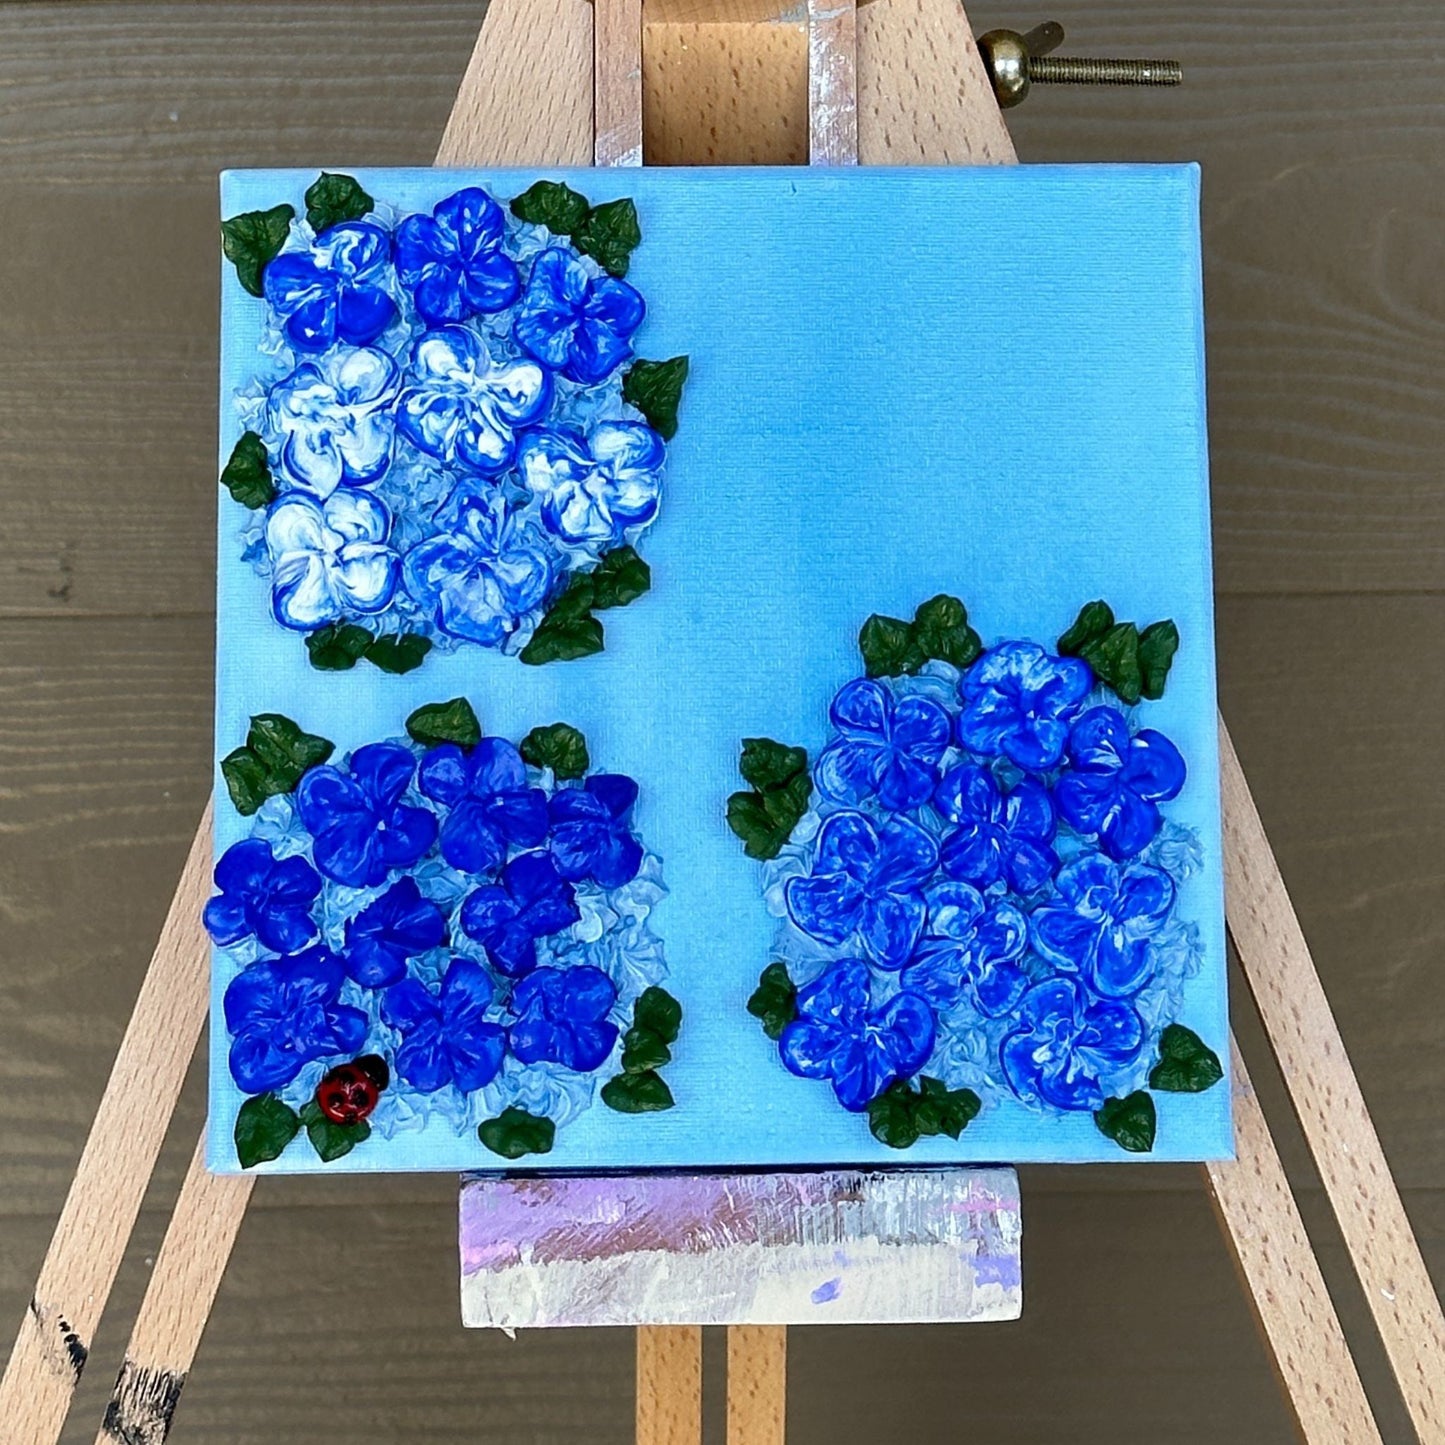 3D Blue Hydrangeas on Blue Canvas 8"x8"